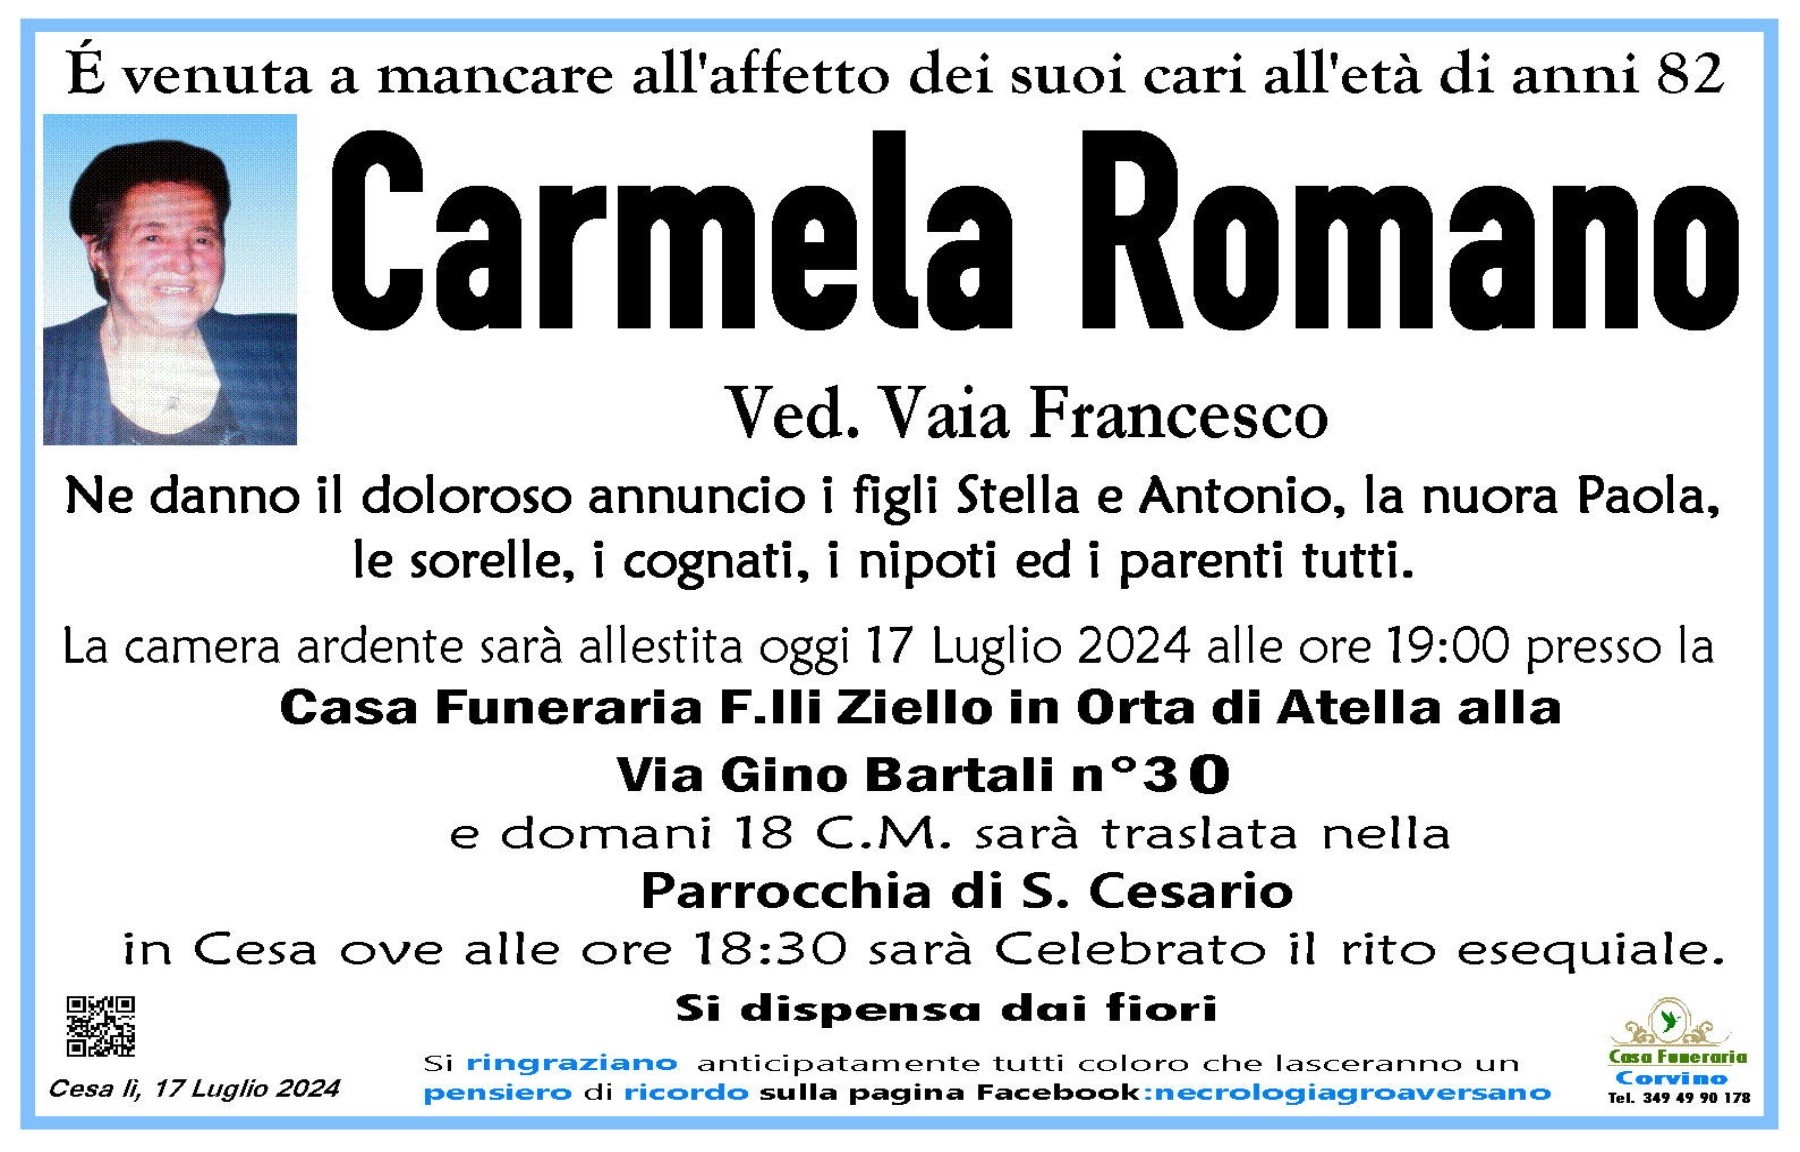 Carmela Romano